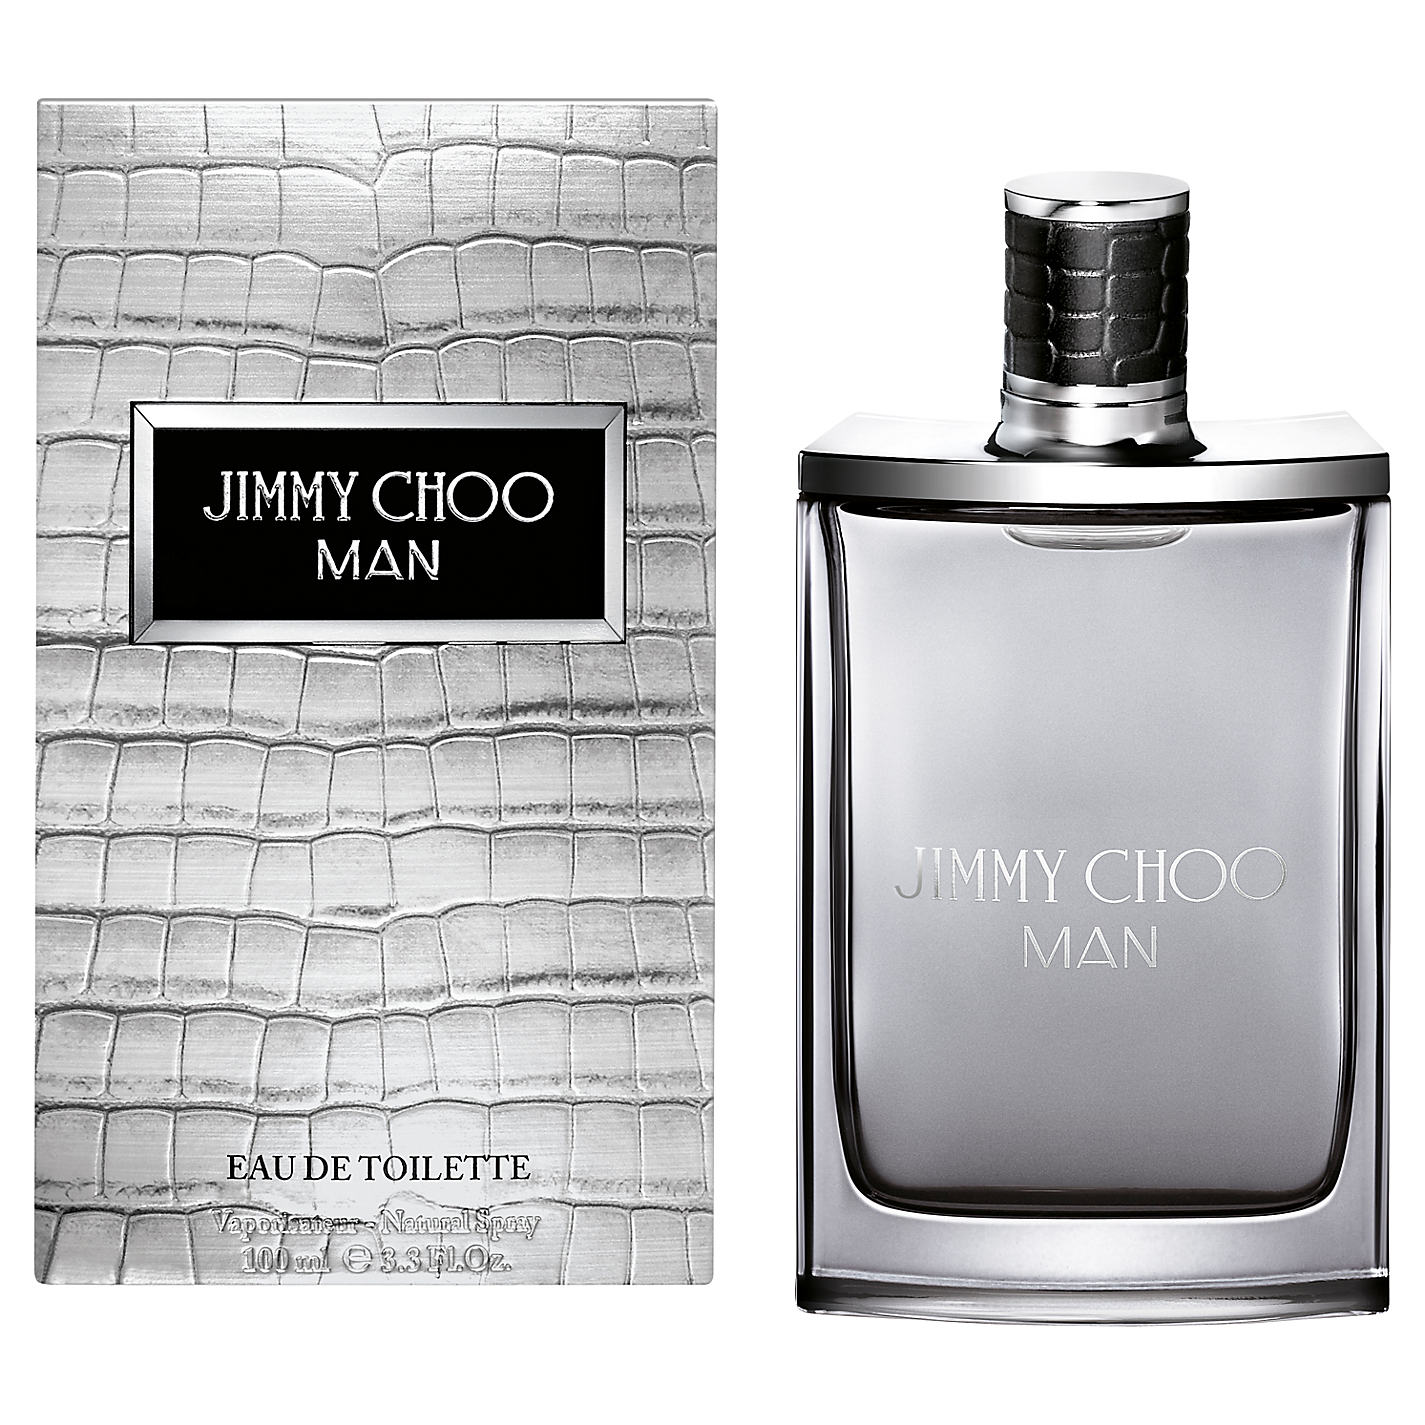 JIMMY CHOO MEN EDT 100ML - Perfume Bangladesh